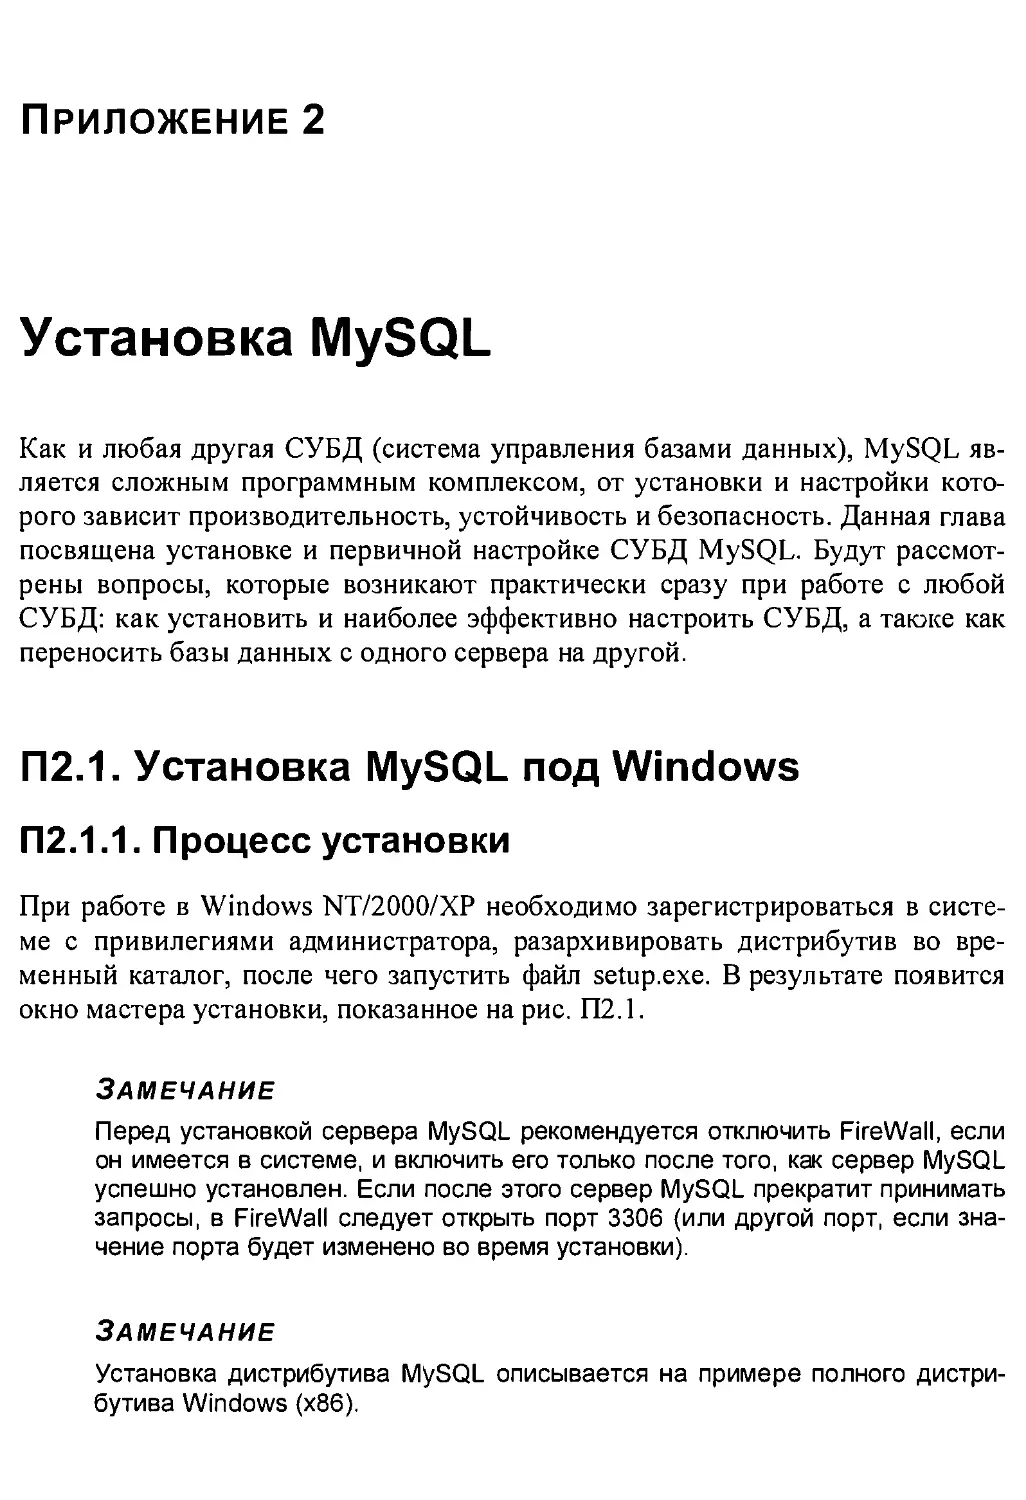 Приложение 2. Установка MySQL